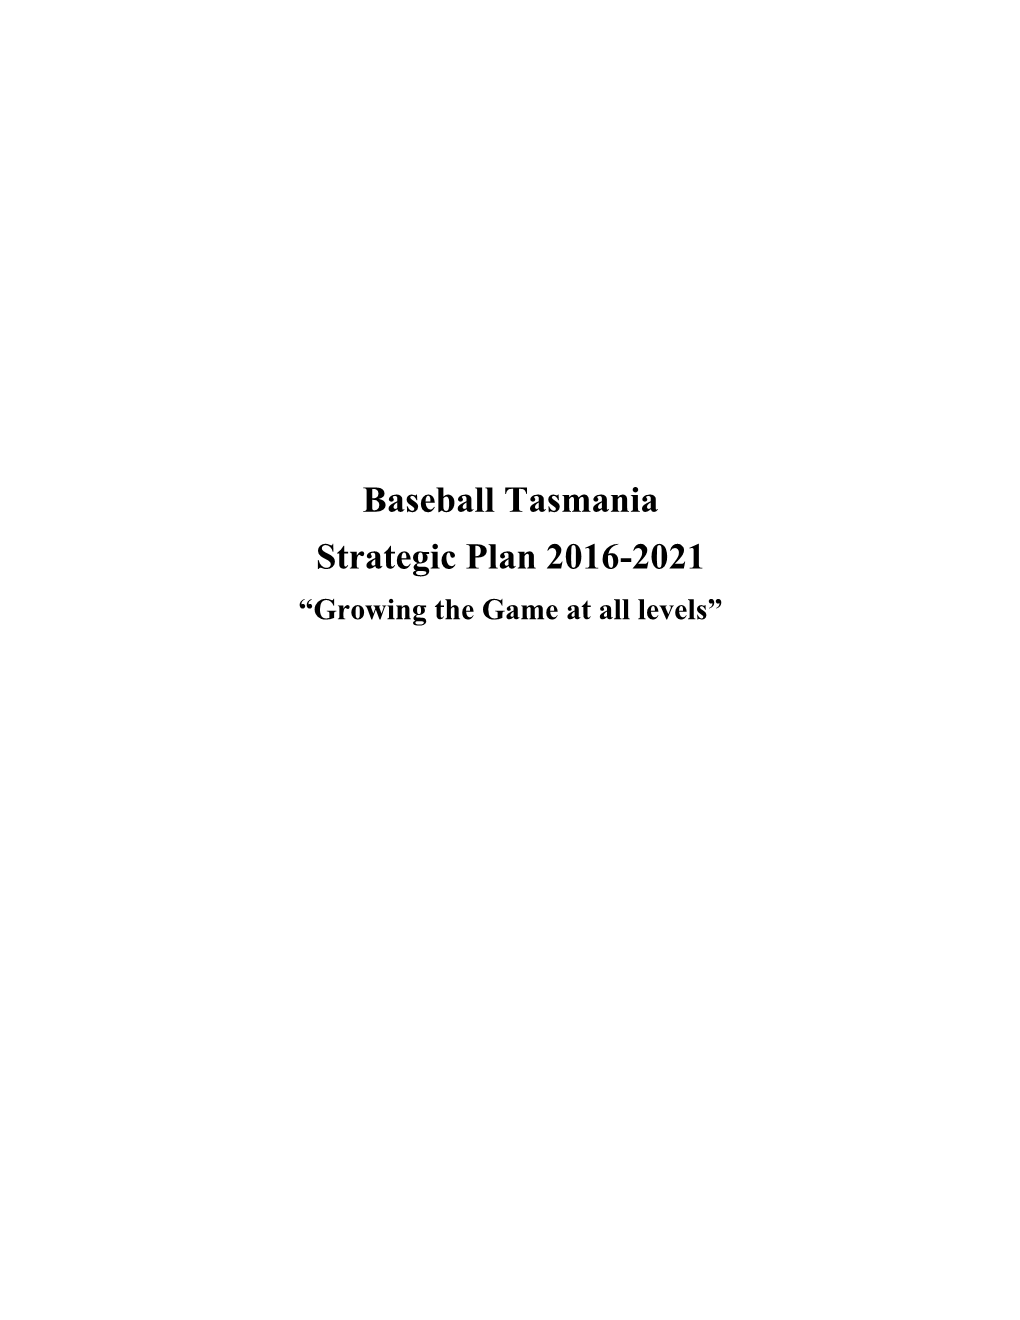 Baseball Tasmania Strategic Plan 2016-2021 “Growing the Game at All Levels”